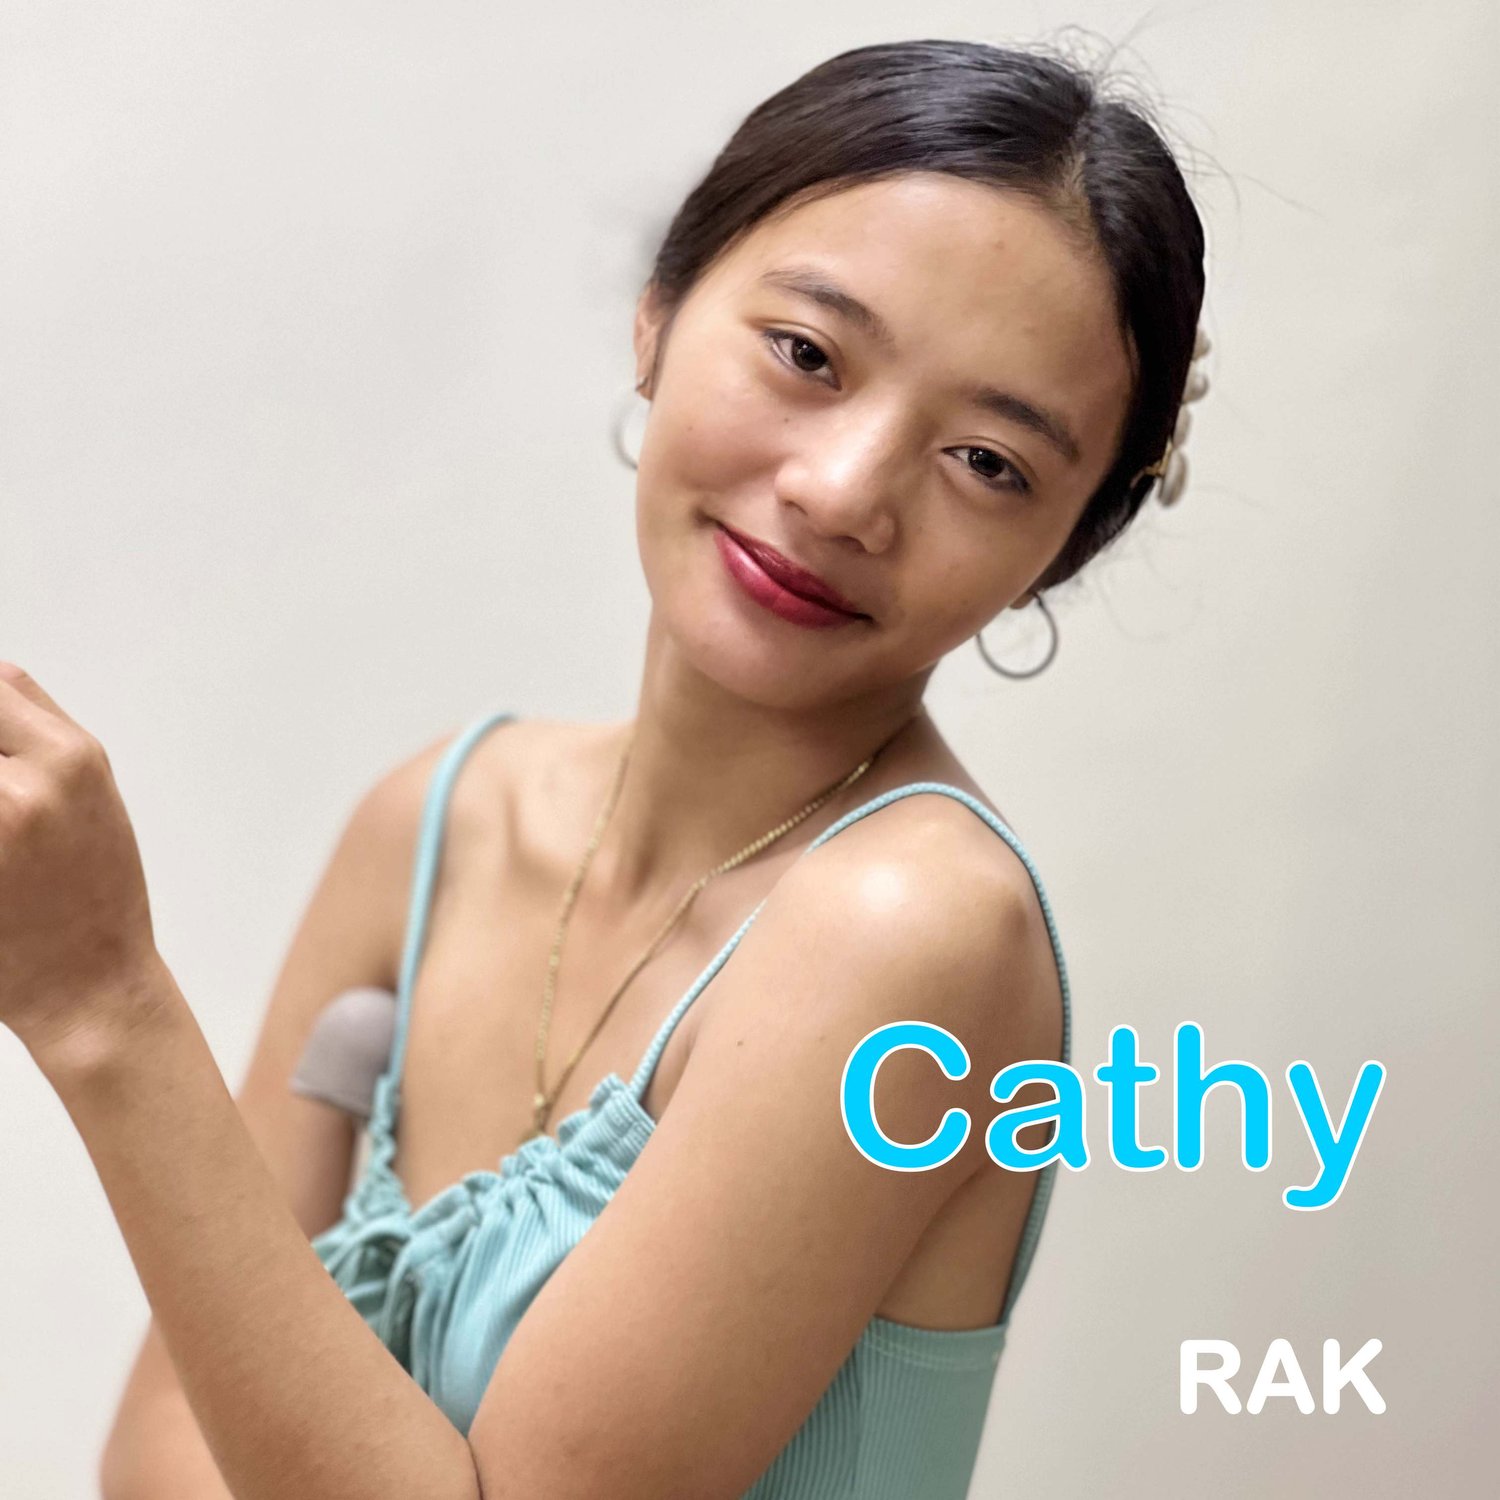 Cathy high RAK amputee